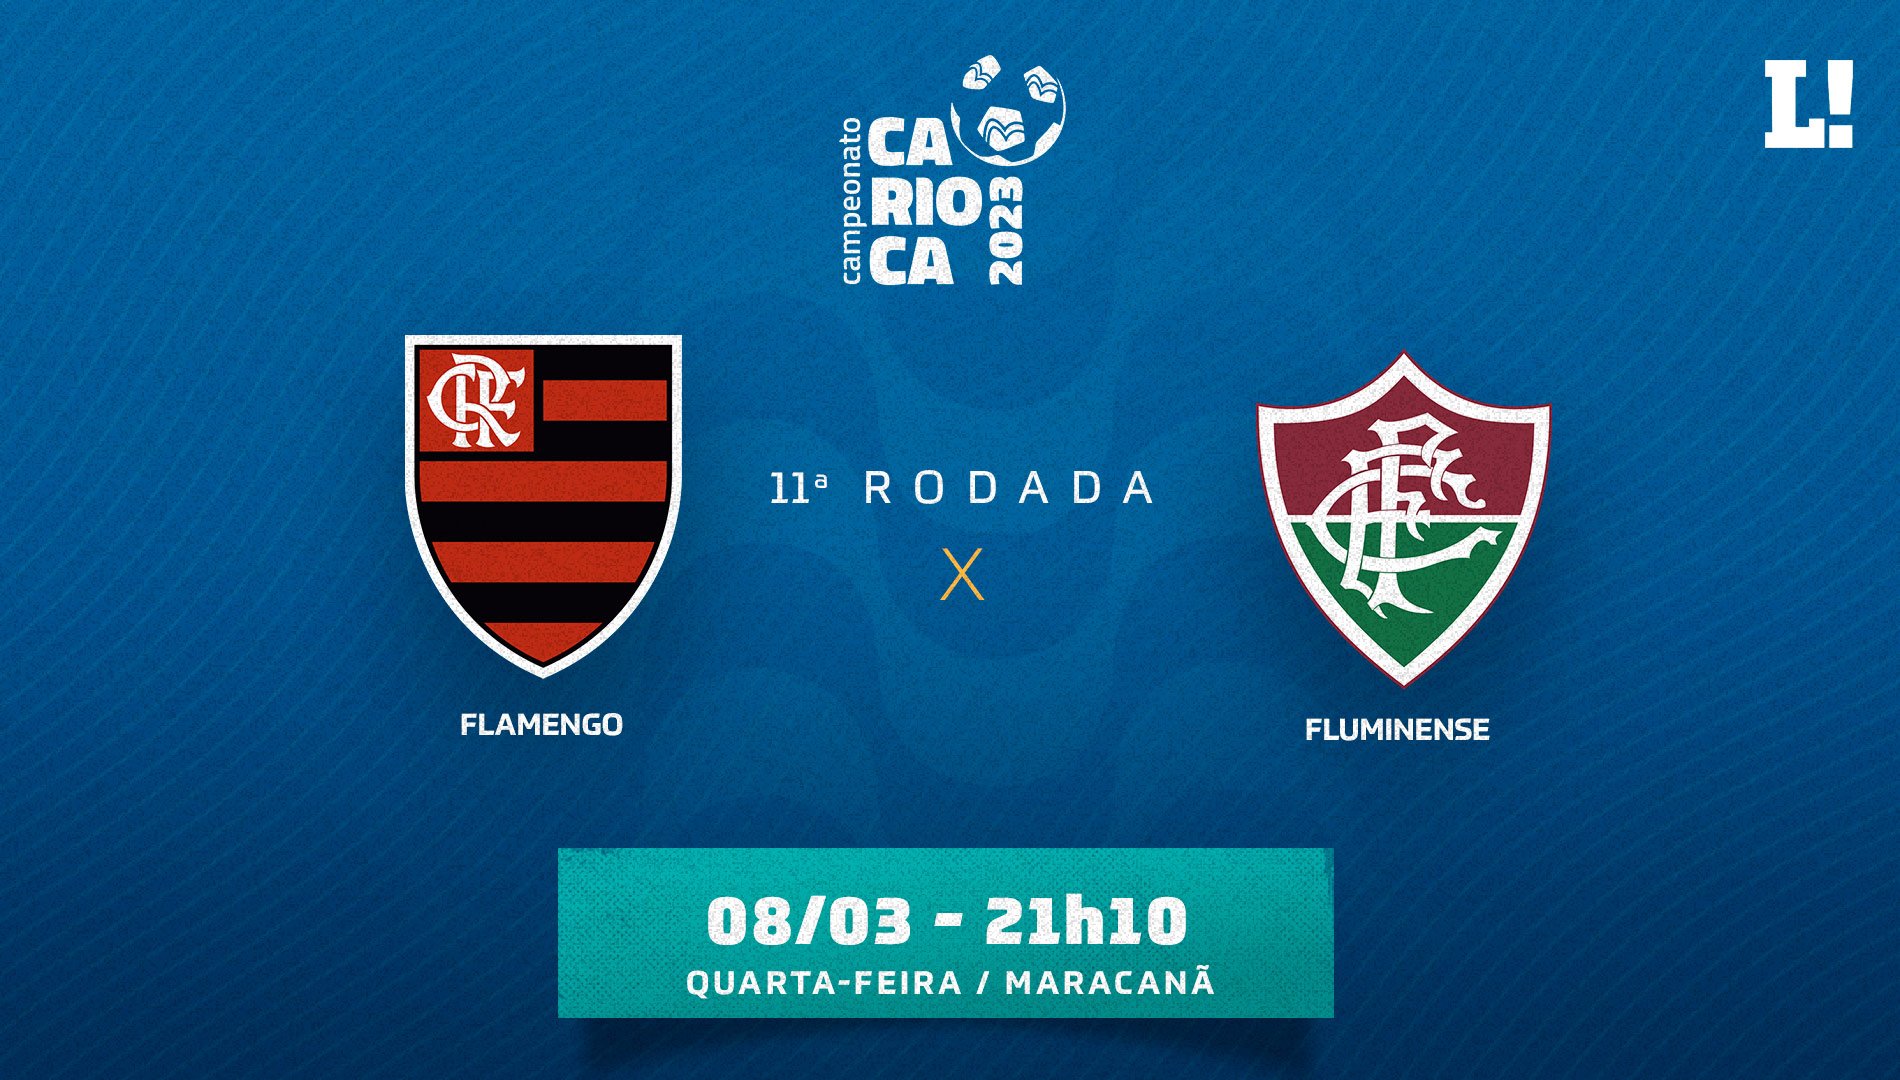 Premier League, Campeonato Carioca saiba onde assistir aos jogos de  sábado - Lance!